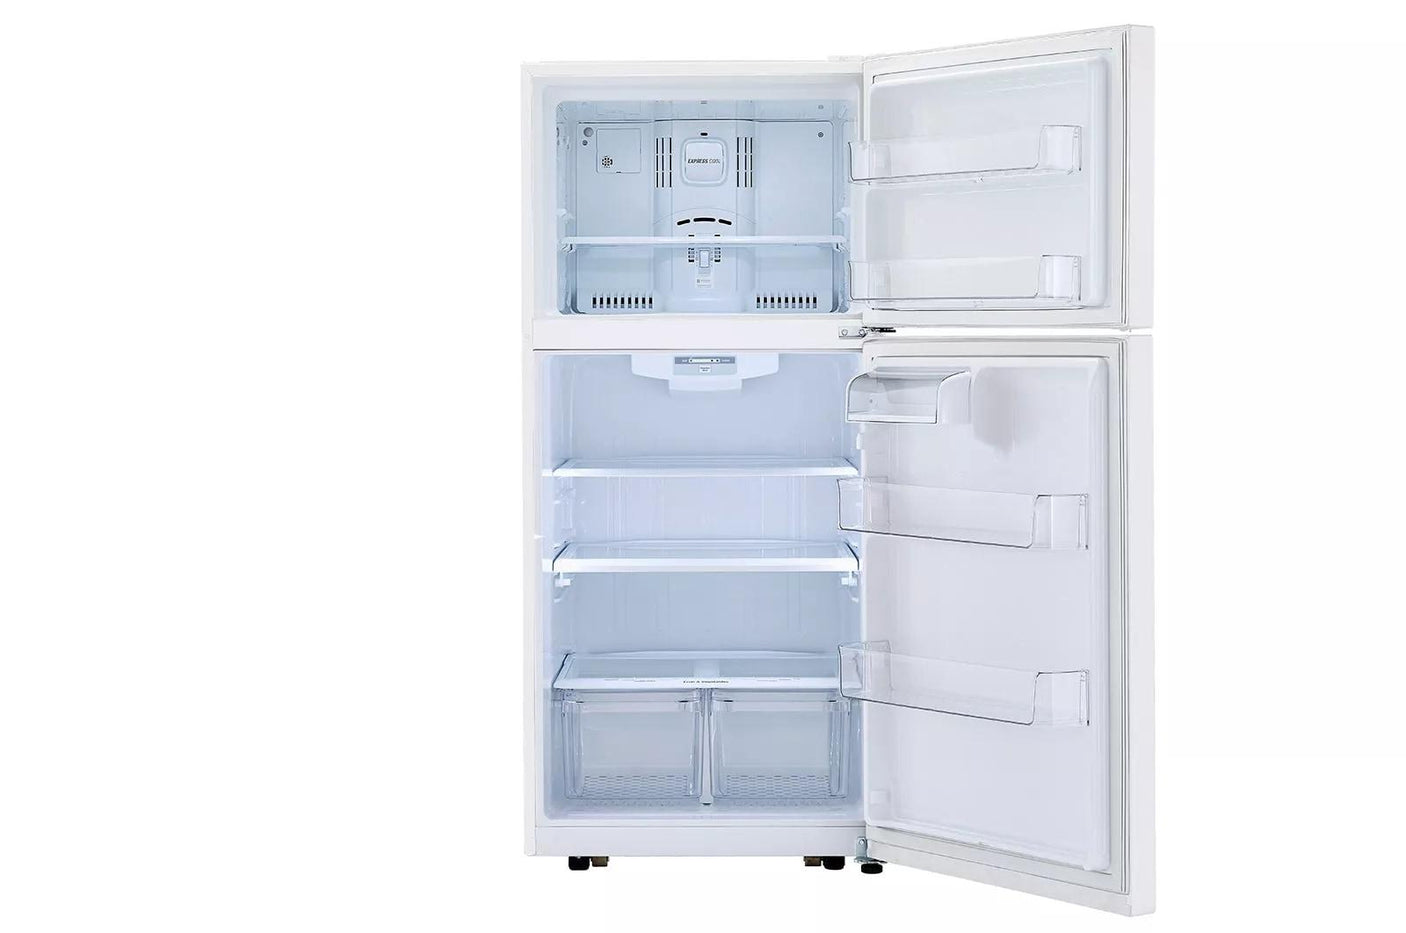 20 cu. ft. Top Freezer Refrigerator